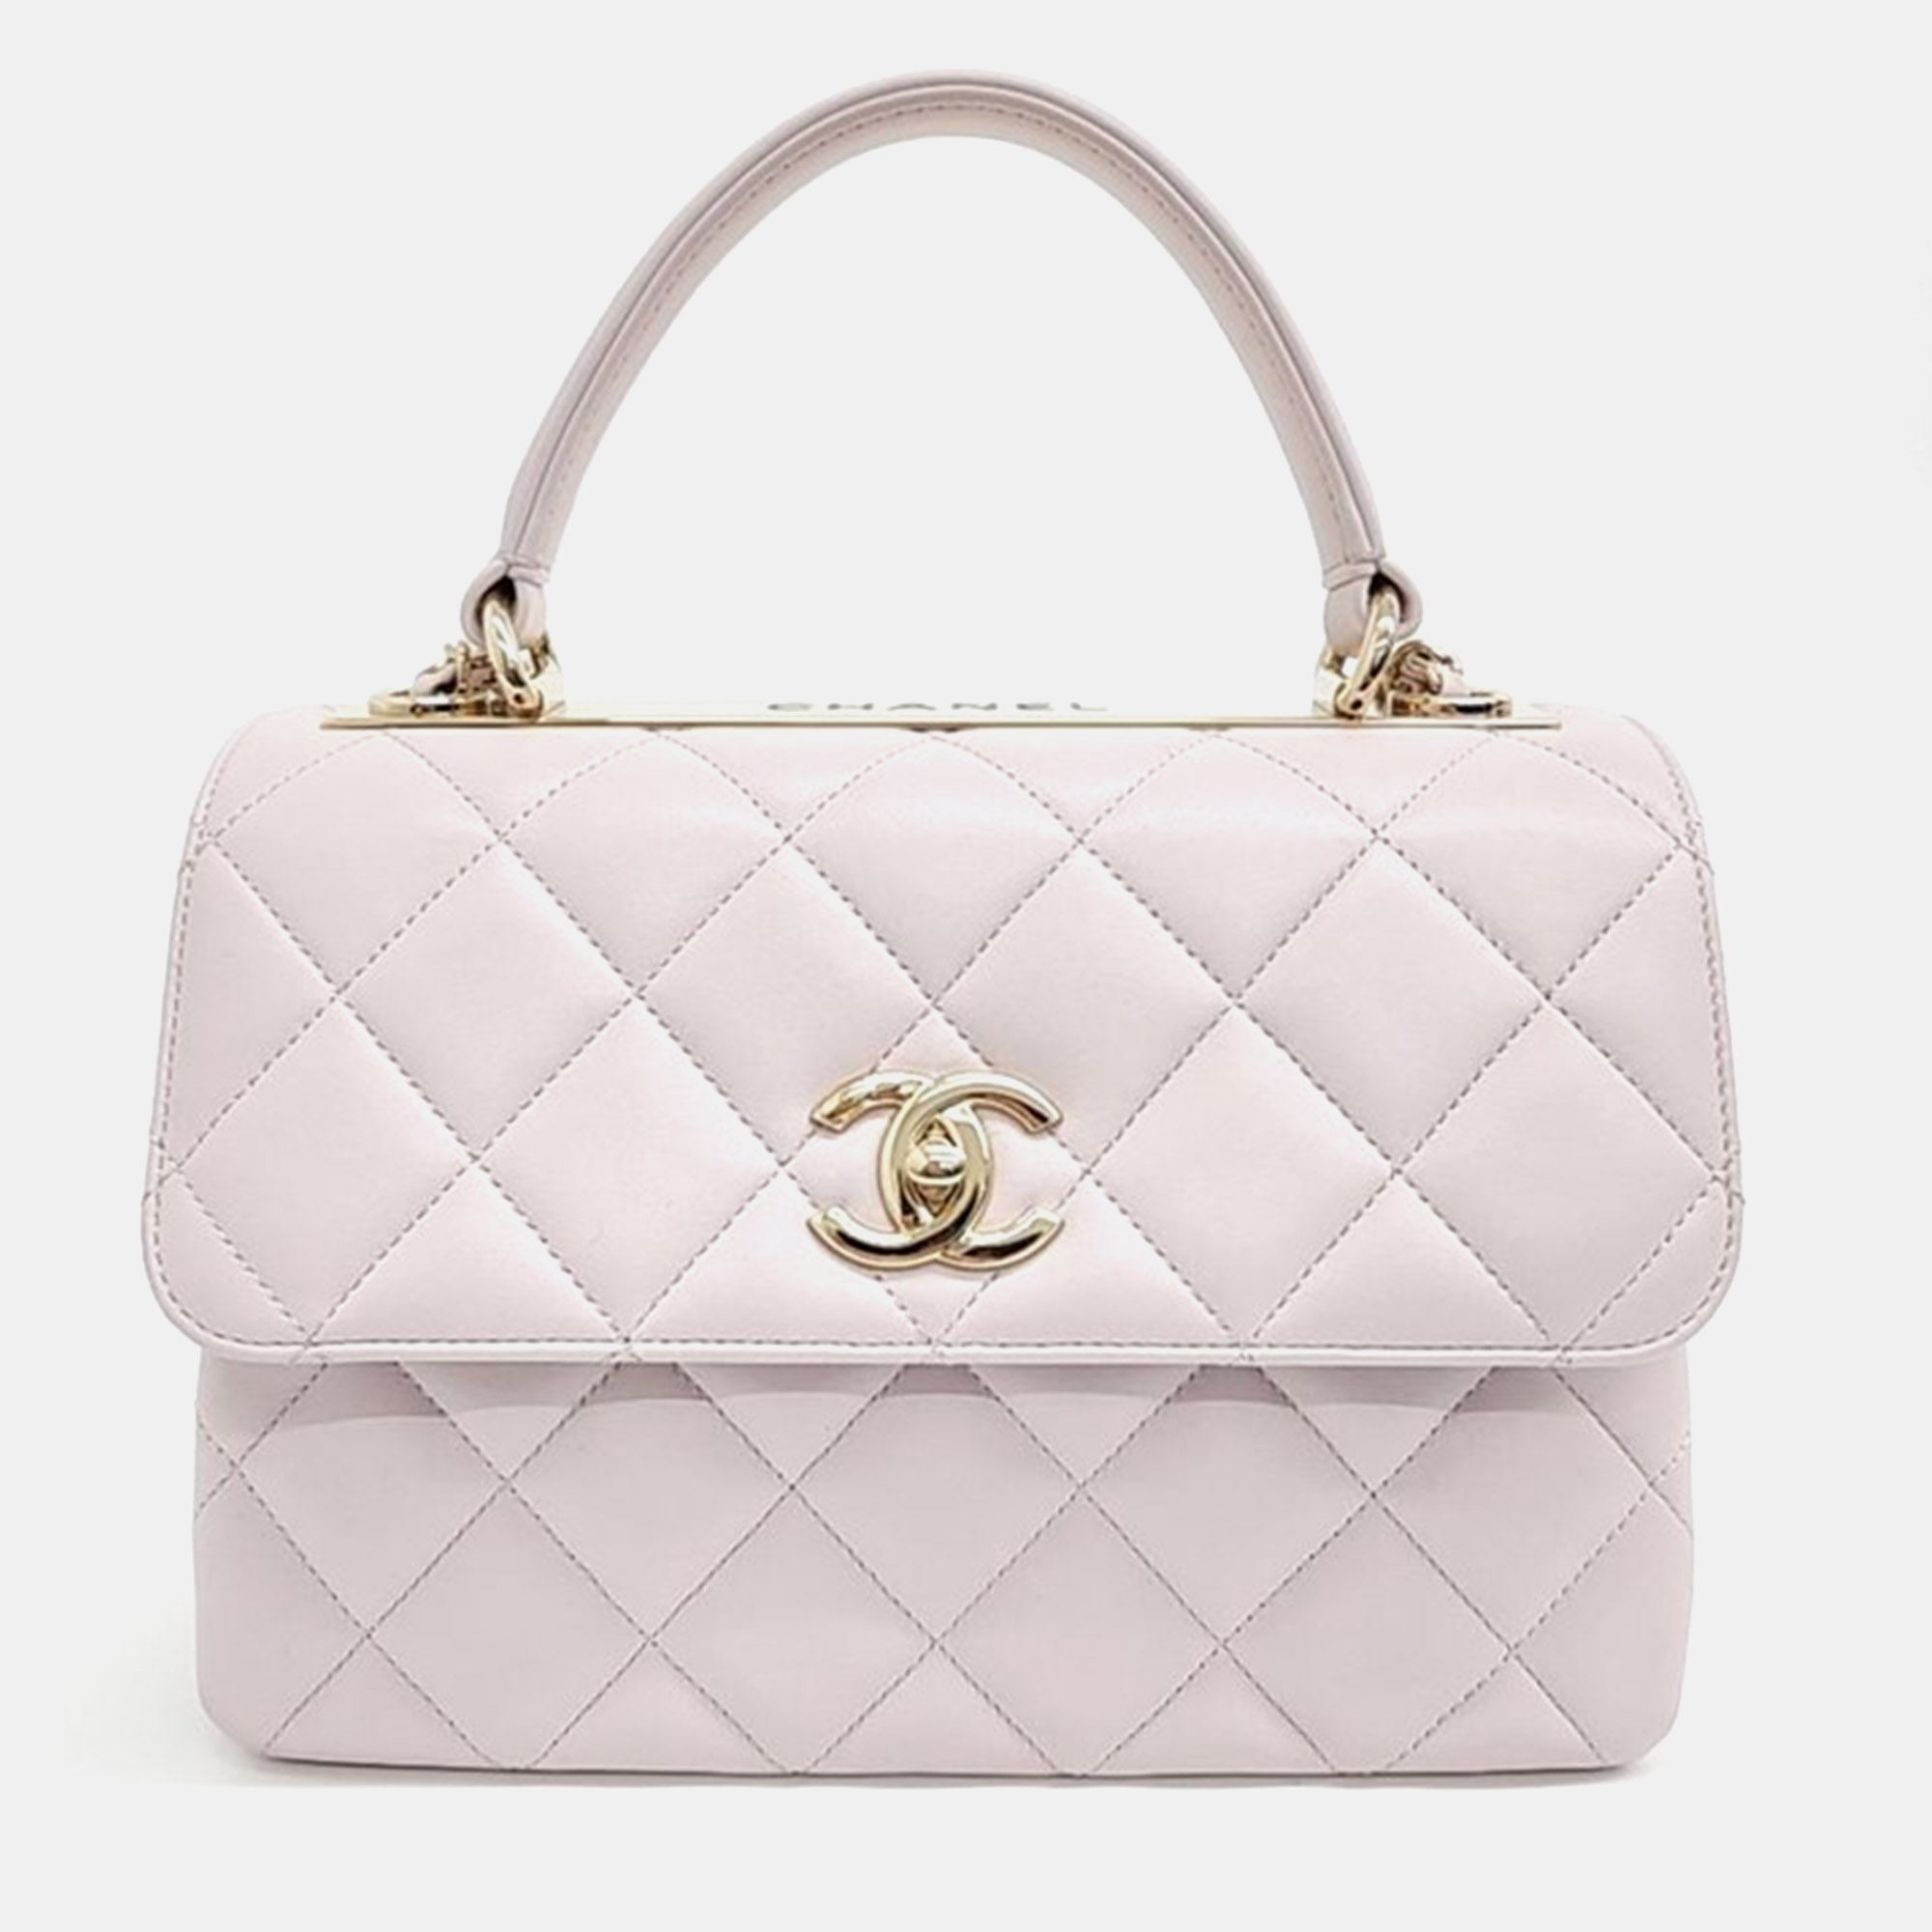 Chanel lambskin trendy cc small a92236 crossbody bag